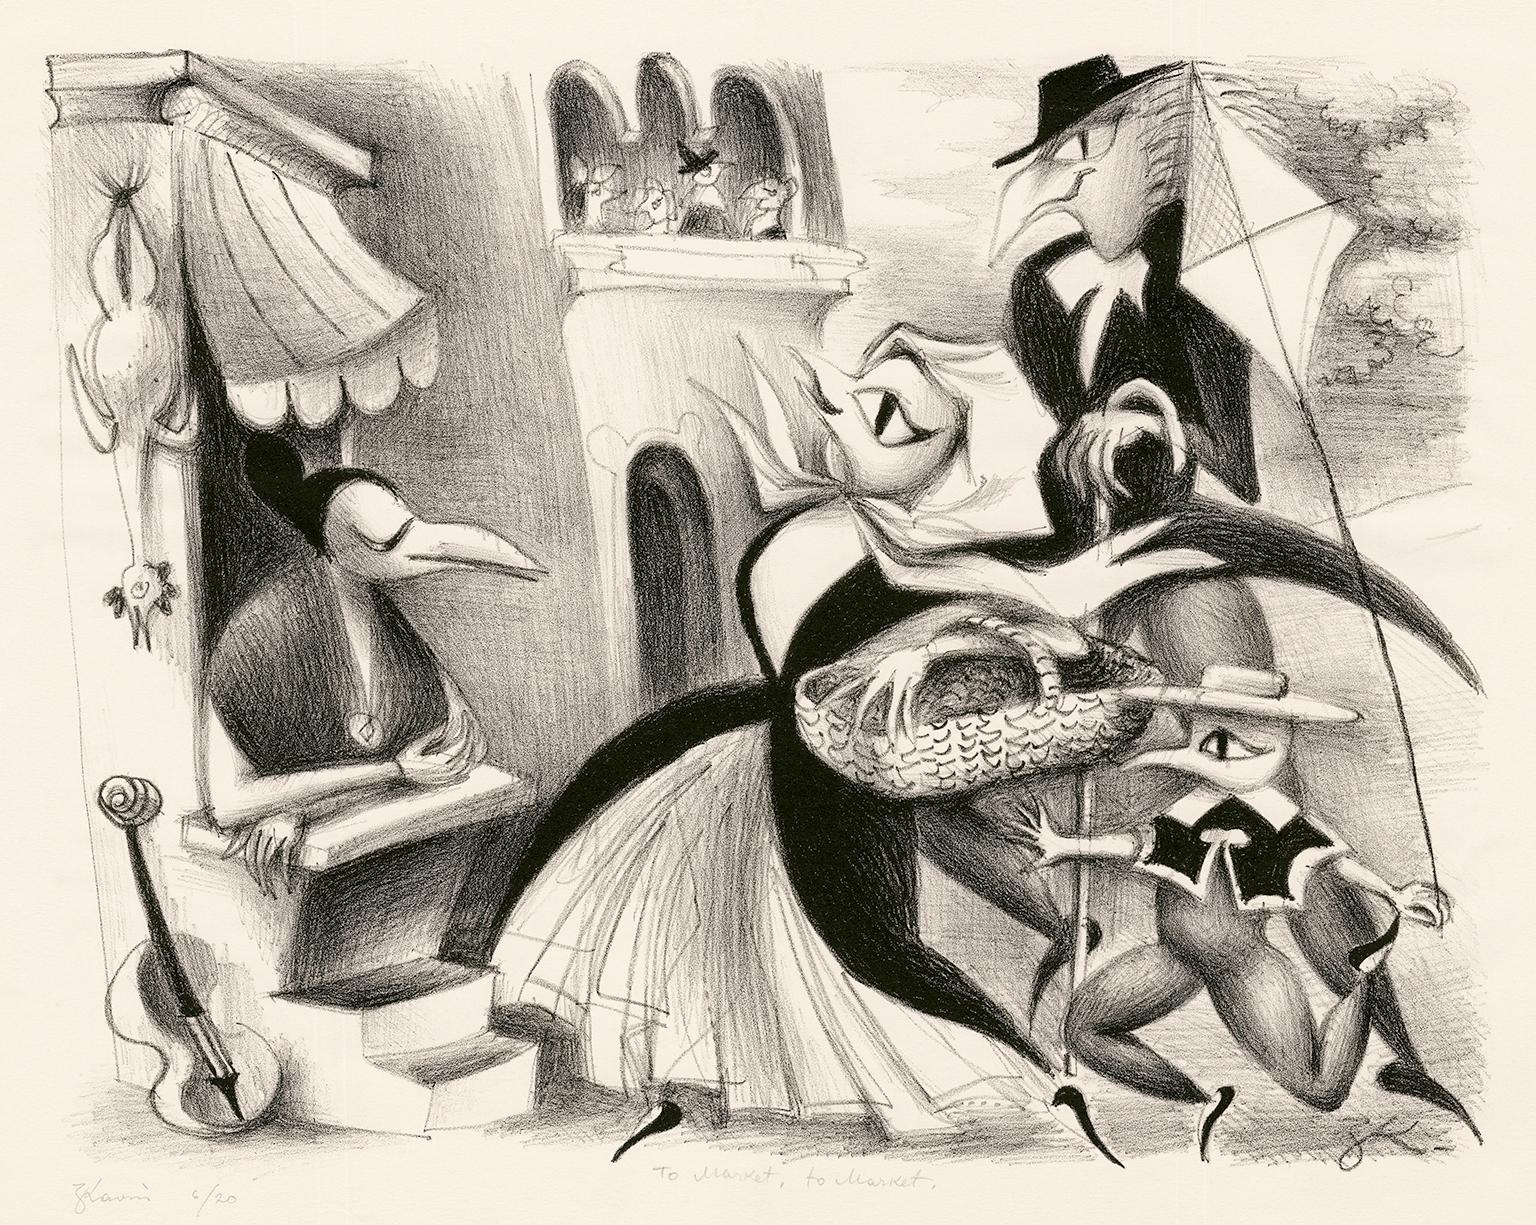 Zena Kavin Figurative Print - 'To Market, to Market' — 1930s Surrealist Fantasy